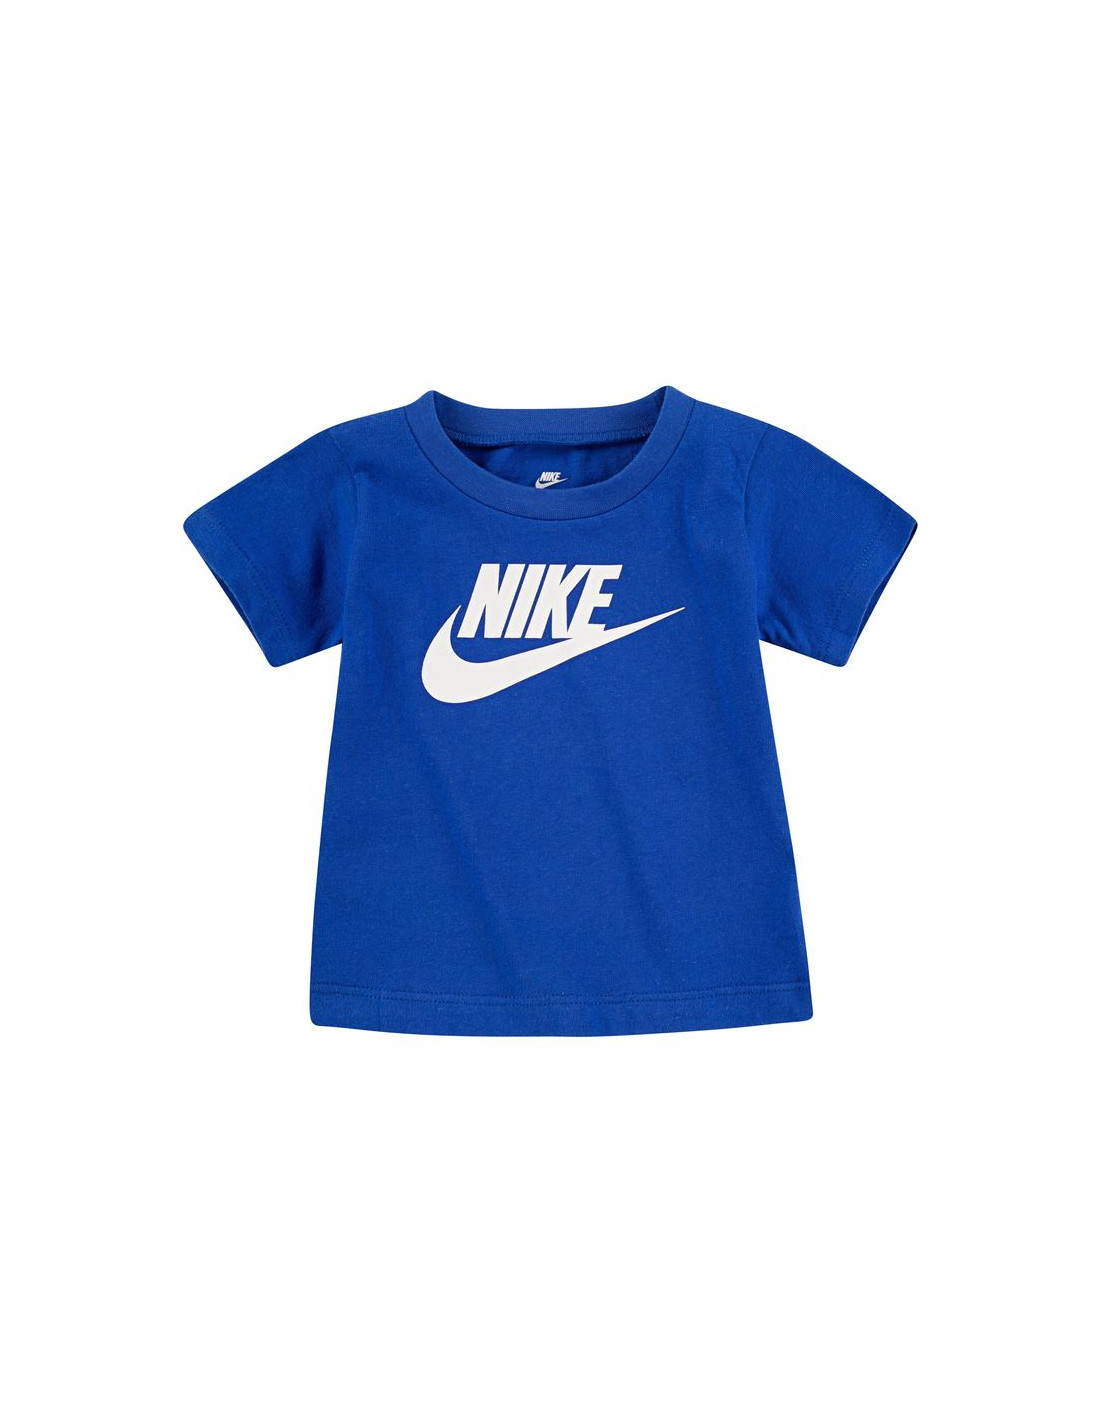 Camiseta nike futura ss infantil azul